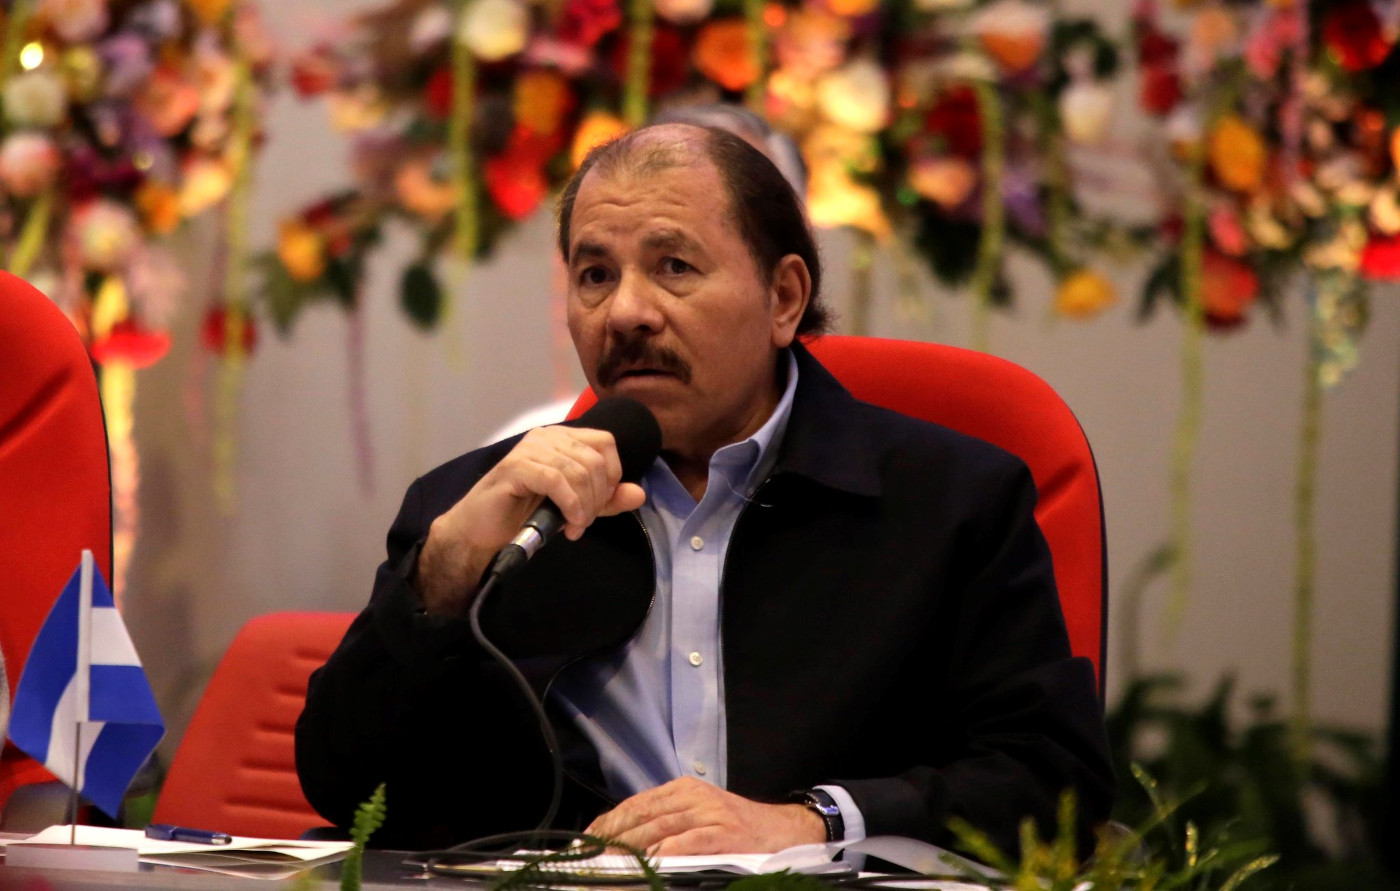 Daniel Ortega, Präsident von Nicaragua, regiert autoritär. Foto: Presidencia El Salvador, CCO1.0